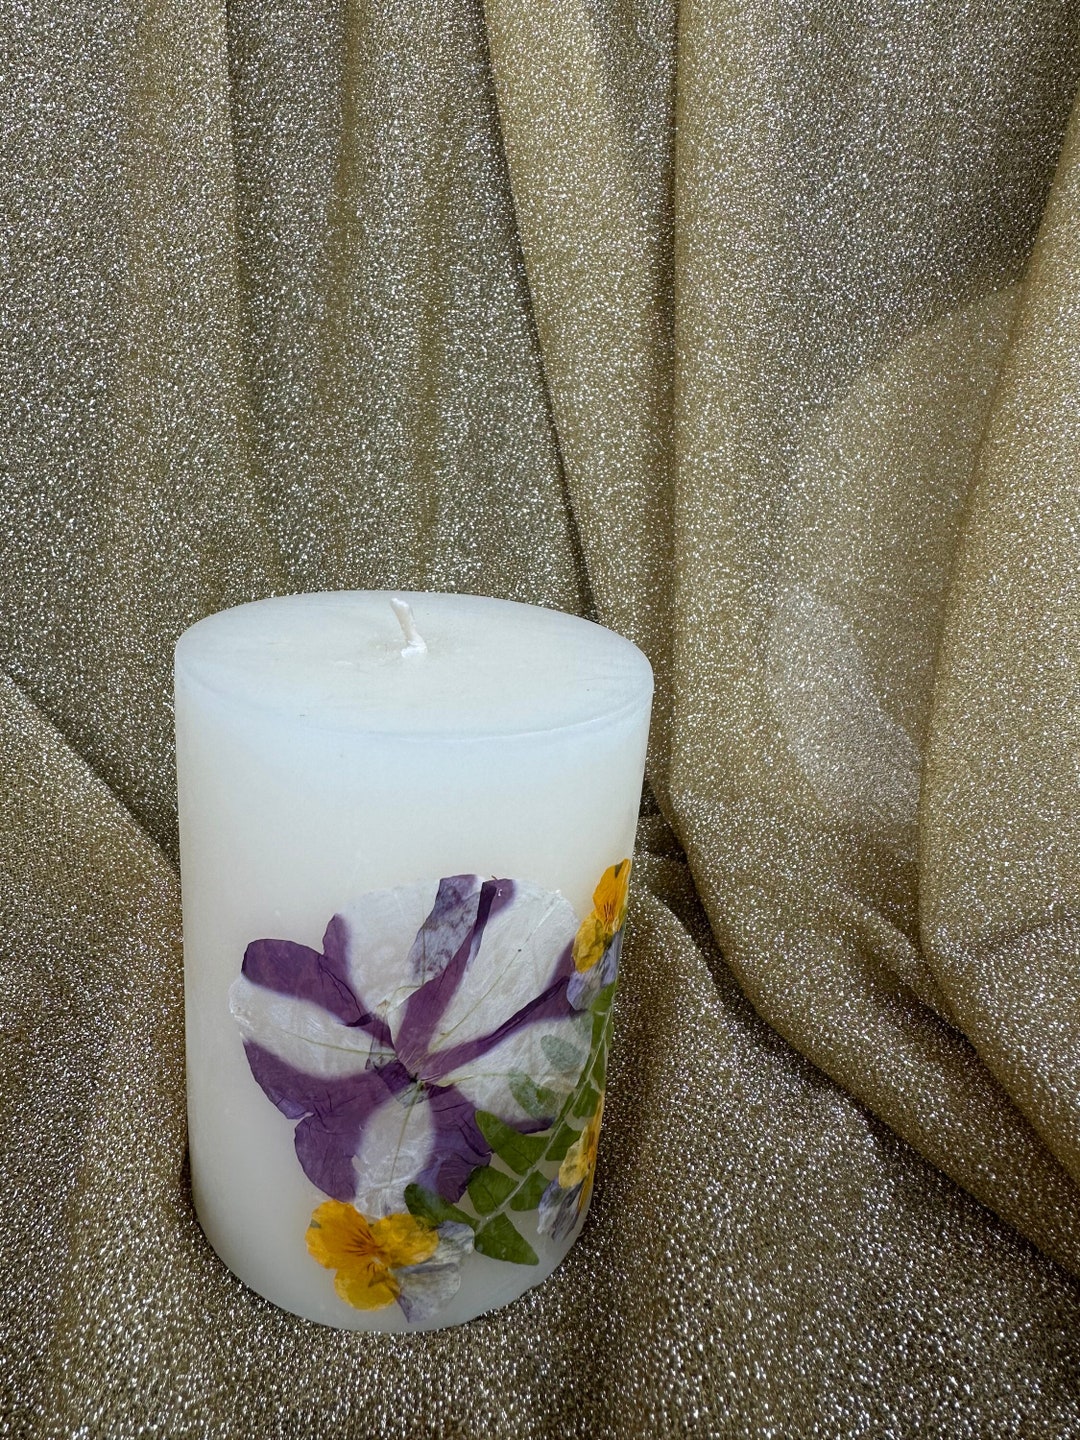 Elegant Set of Pressed Flower Candles in White Hydrangeas 